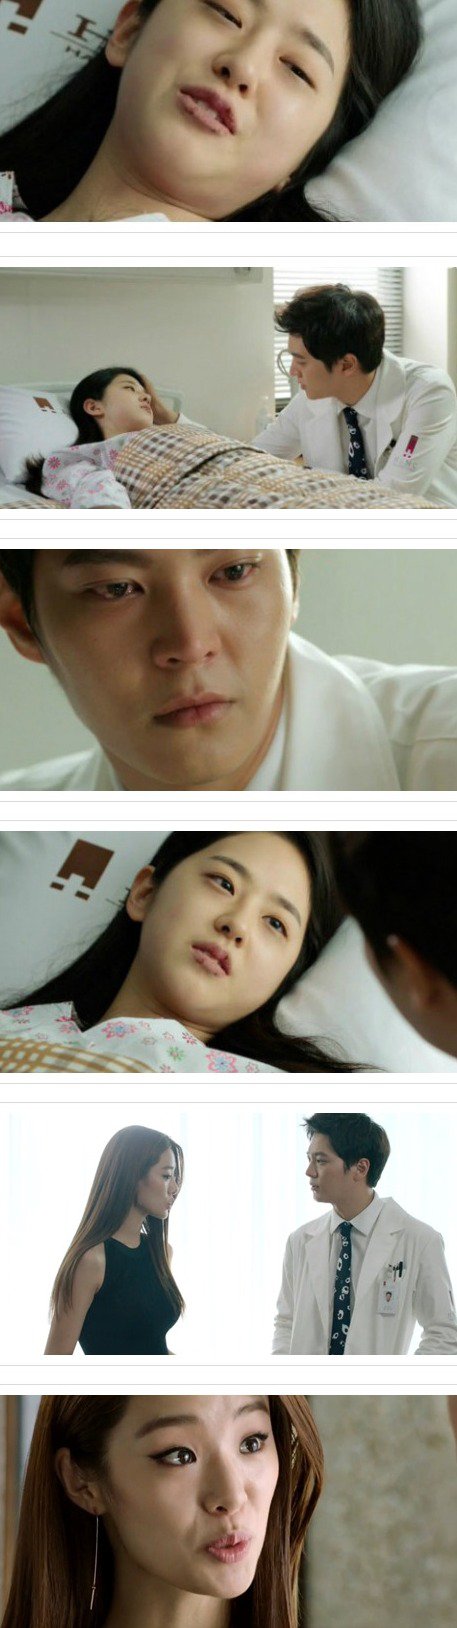 episode 5 captures for the Korean drama 'Yong Pal'